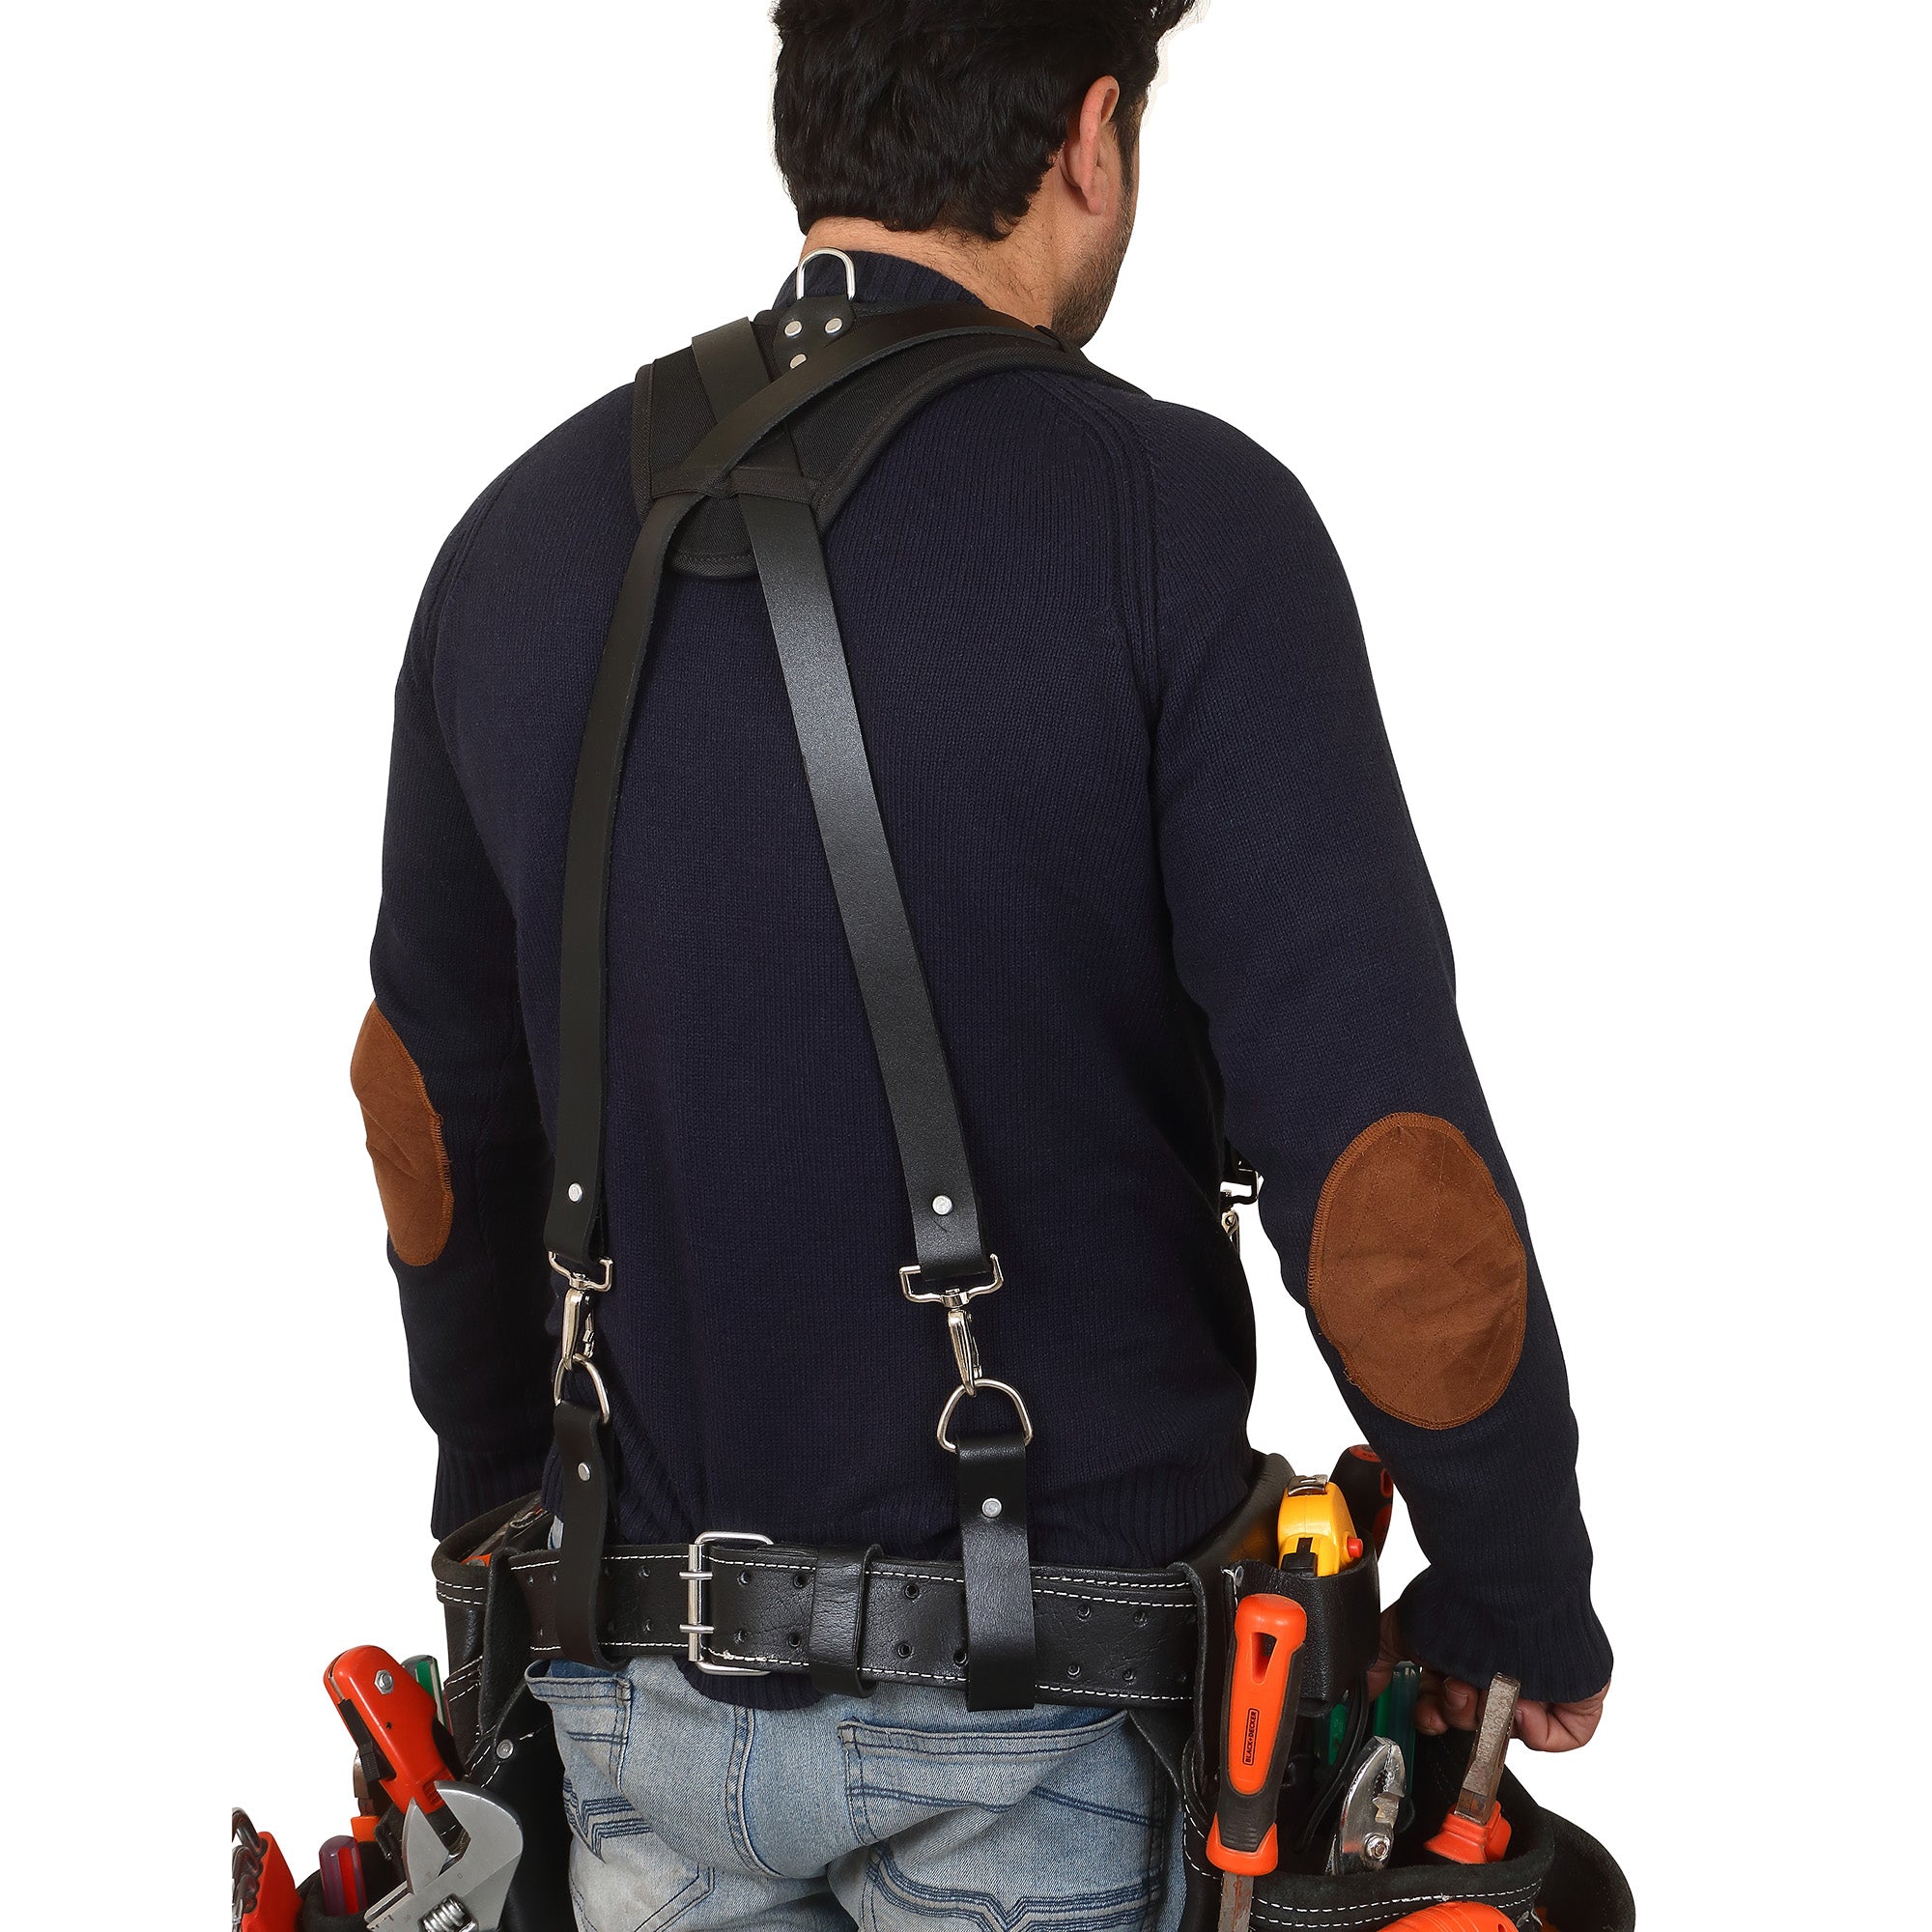 Leather Work Suspender With Pockets, Leather Tool Belt Suspender